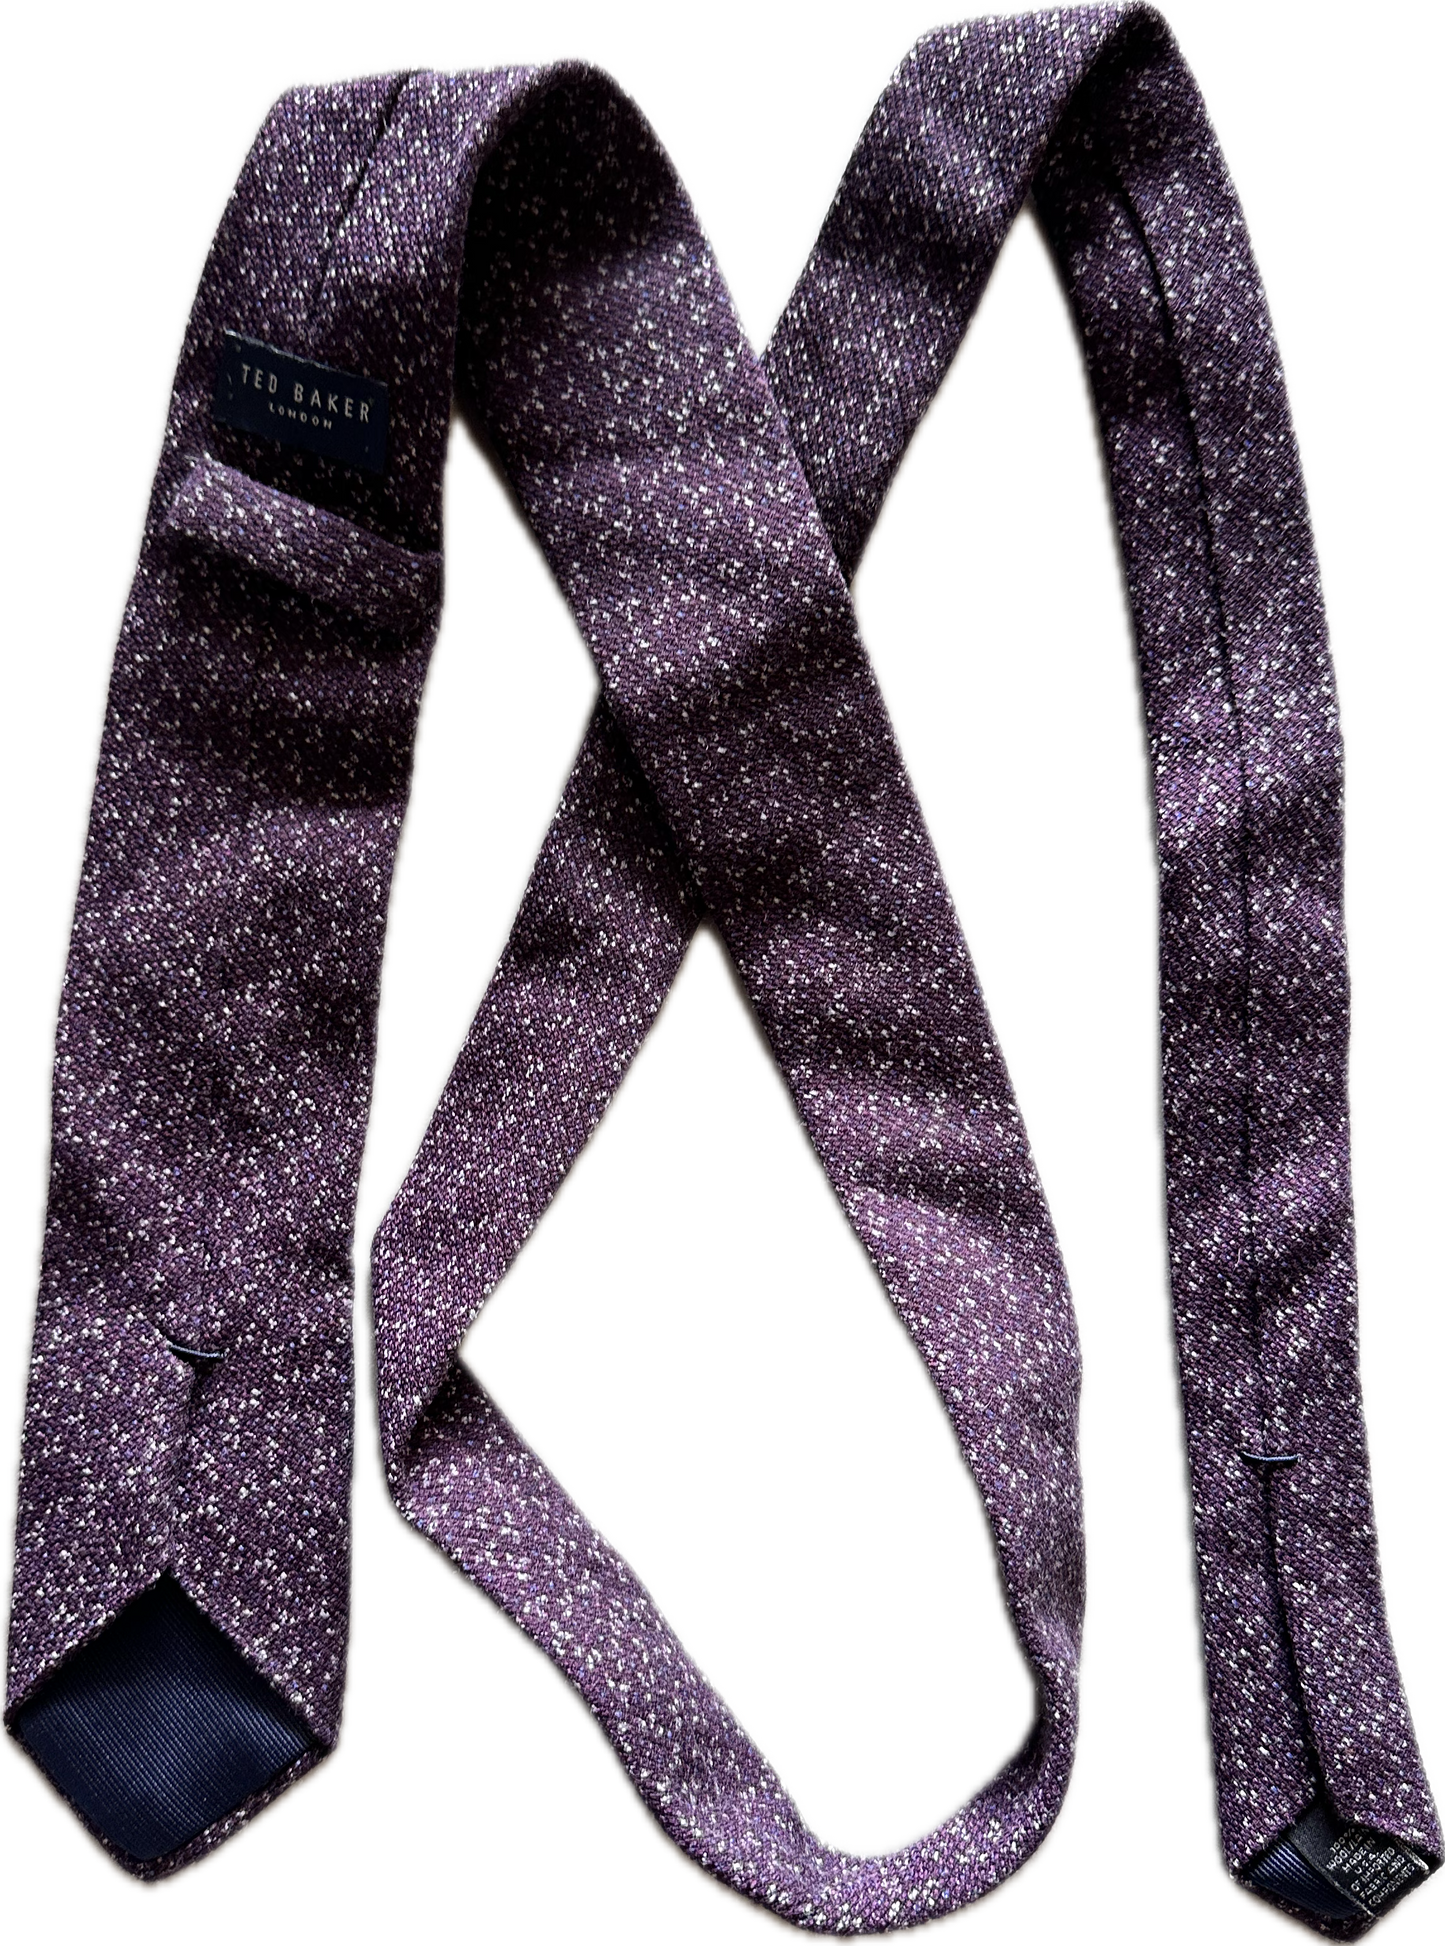 THE GENTLEMEN: Ray’s TED BAKER Purple Knit Skinny Necktie